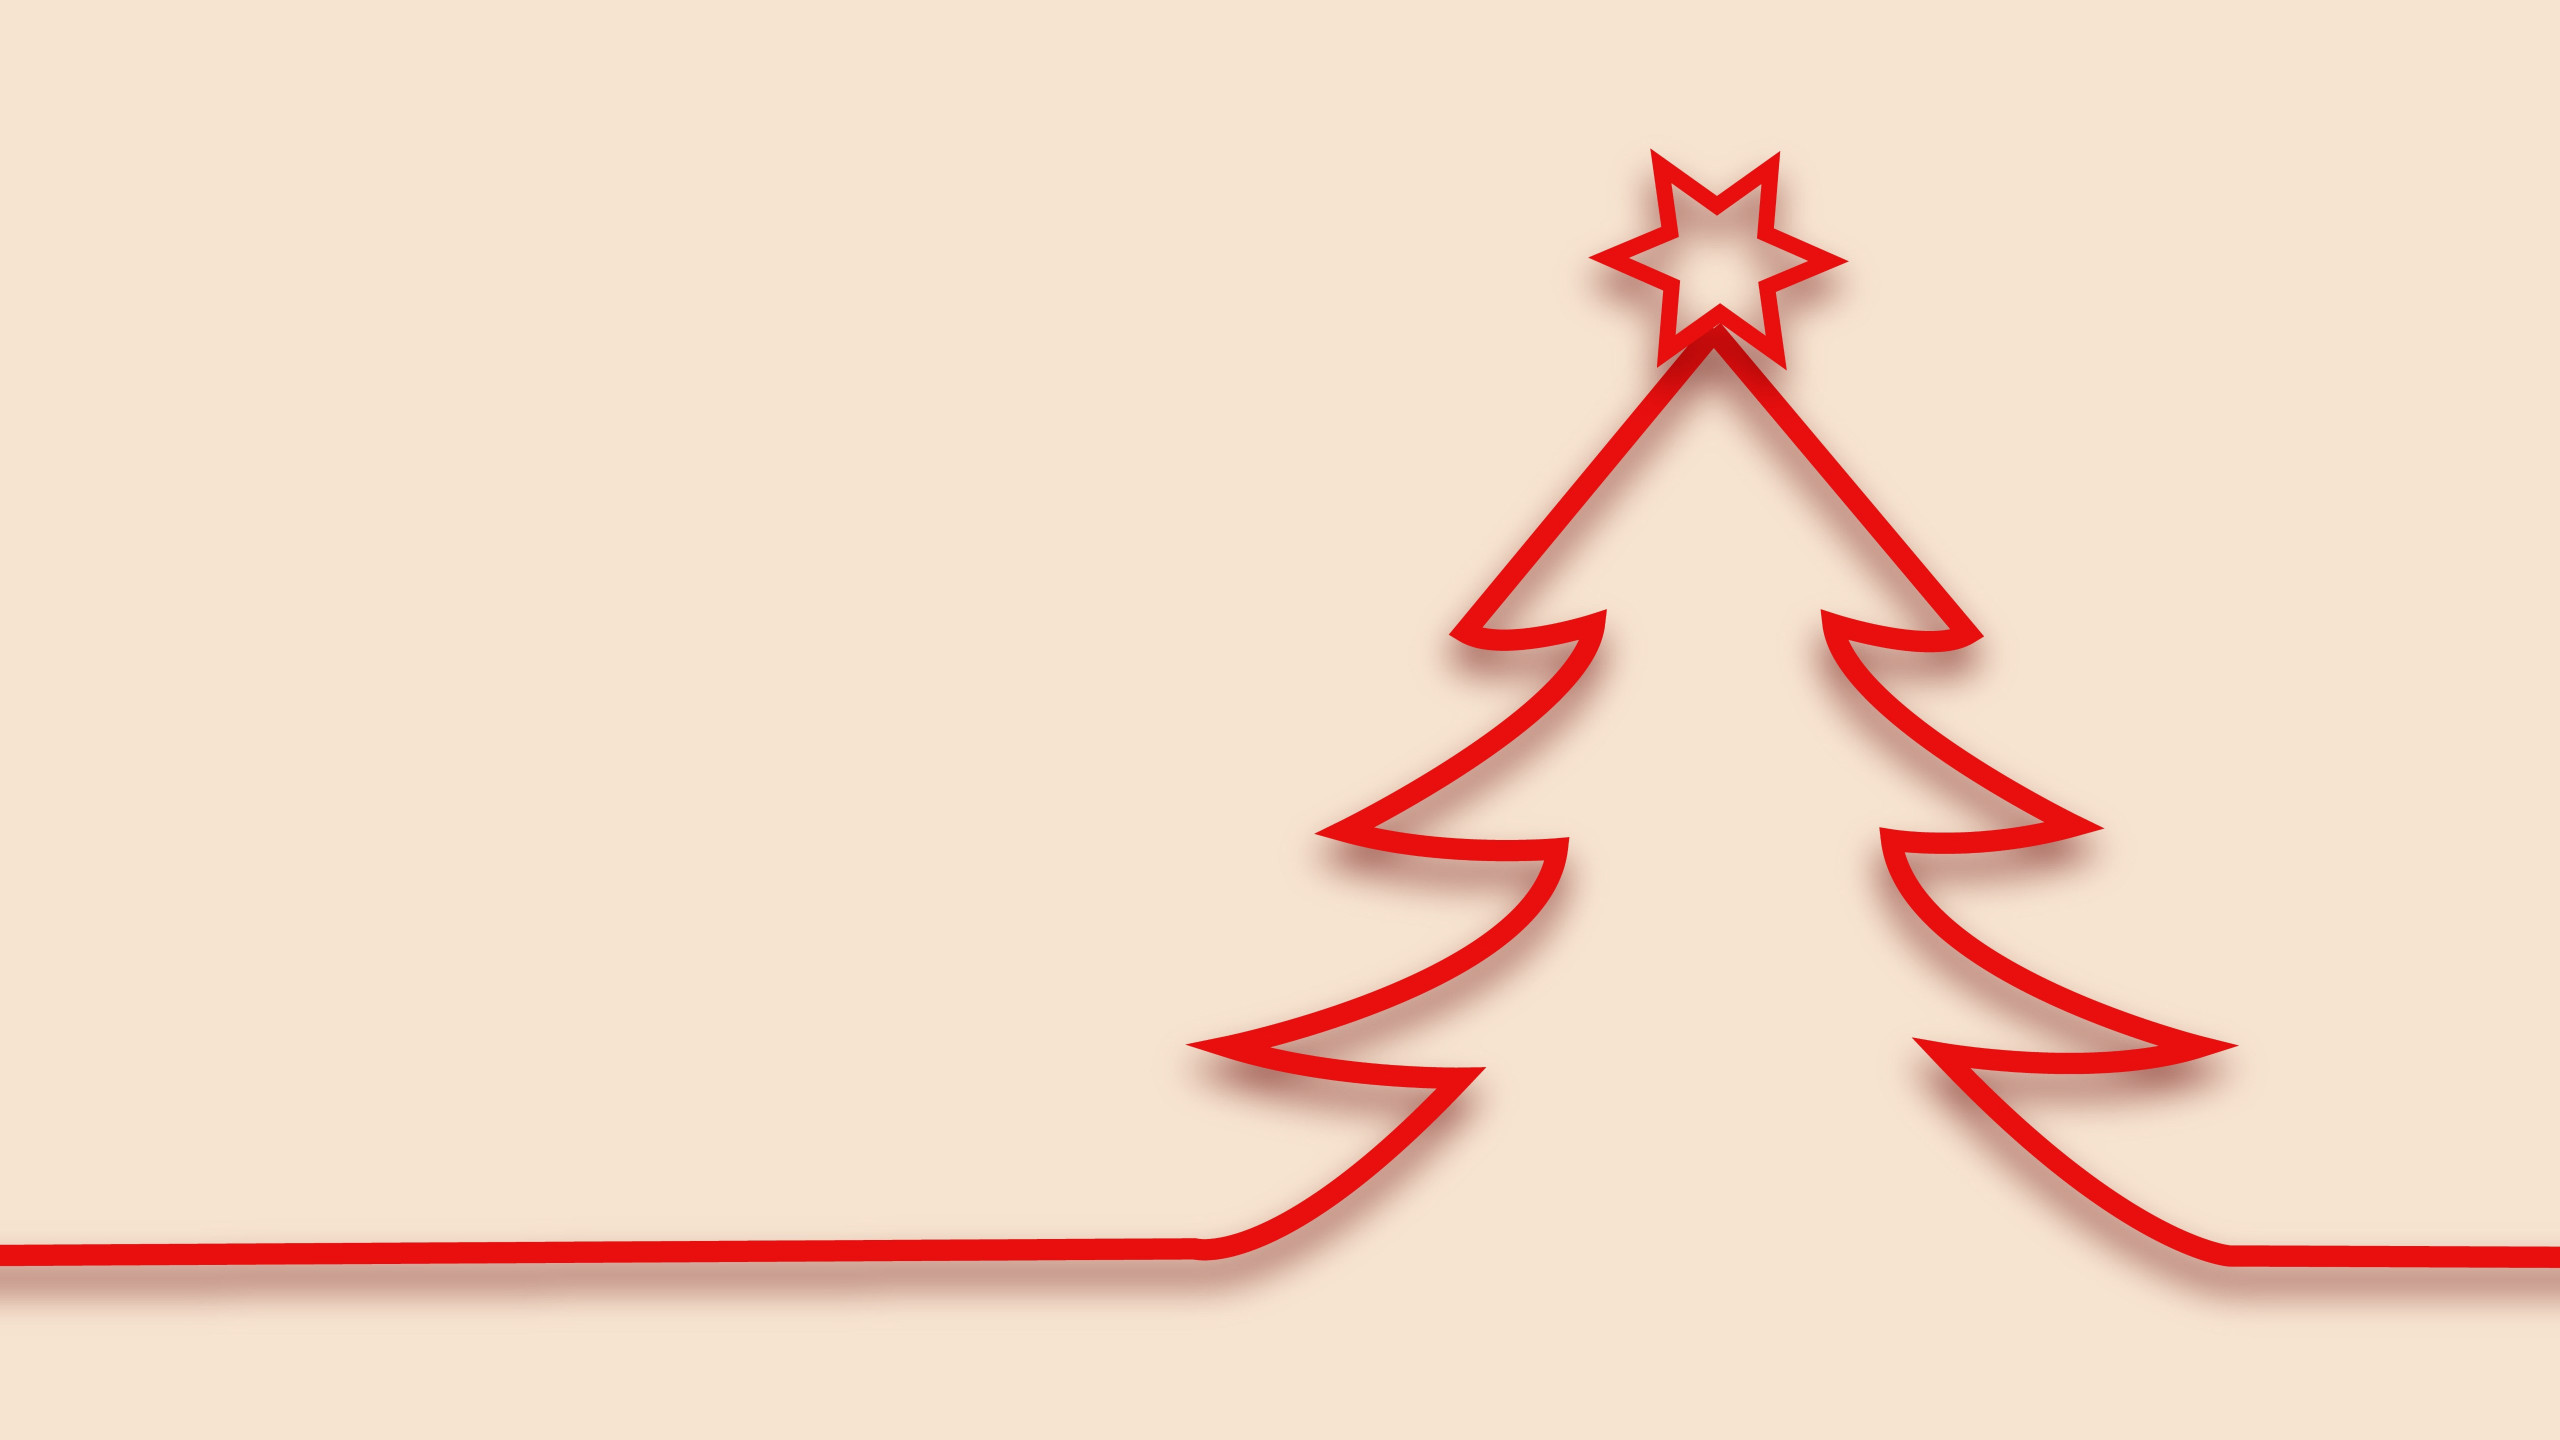 Red minimalistic Christmas tree design wallpaper 2560x1440